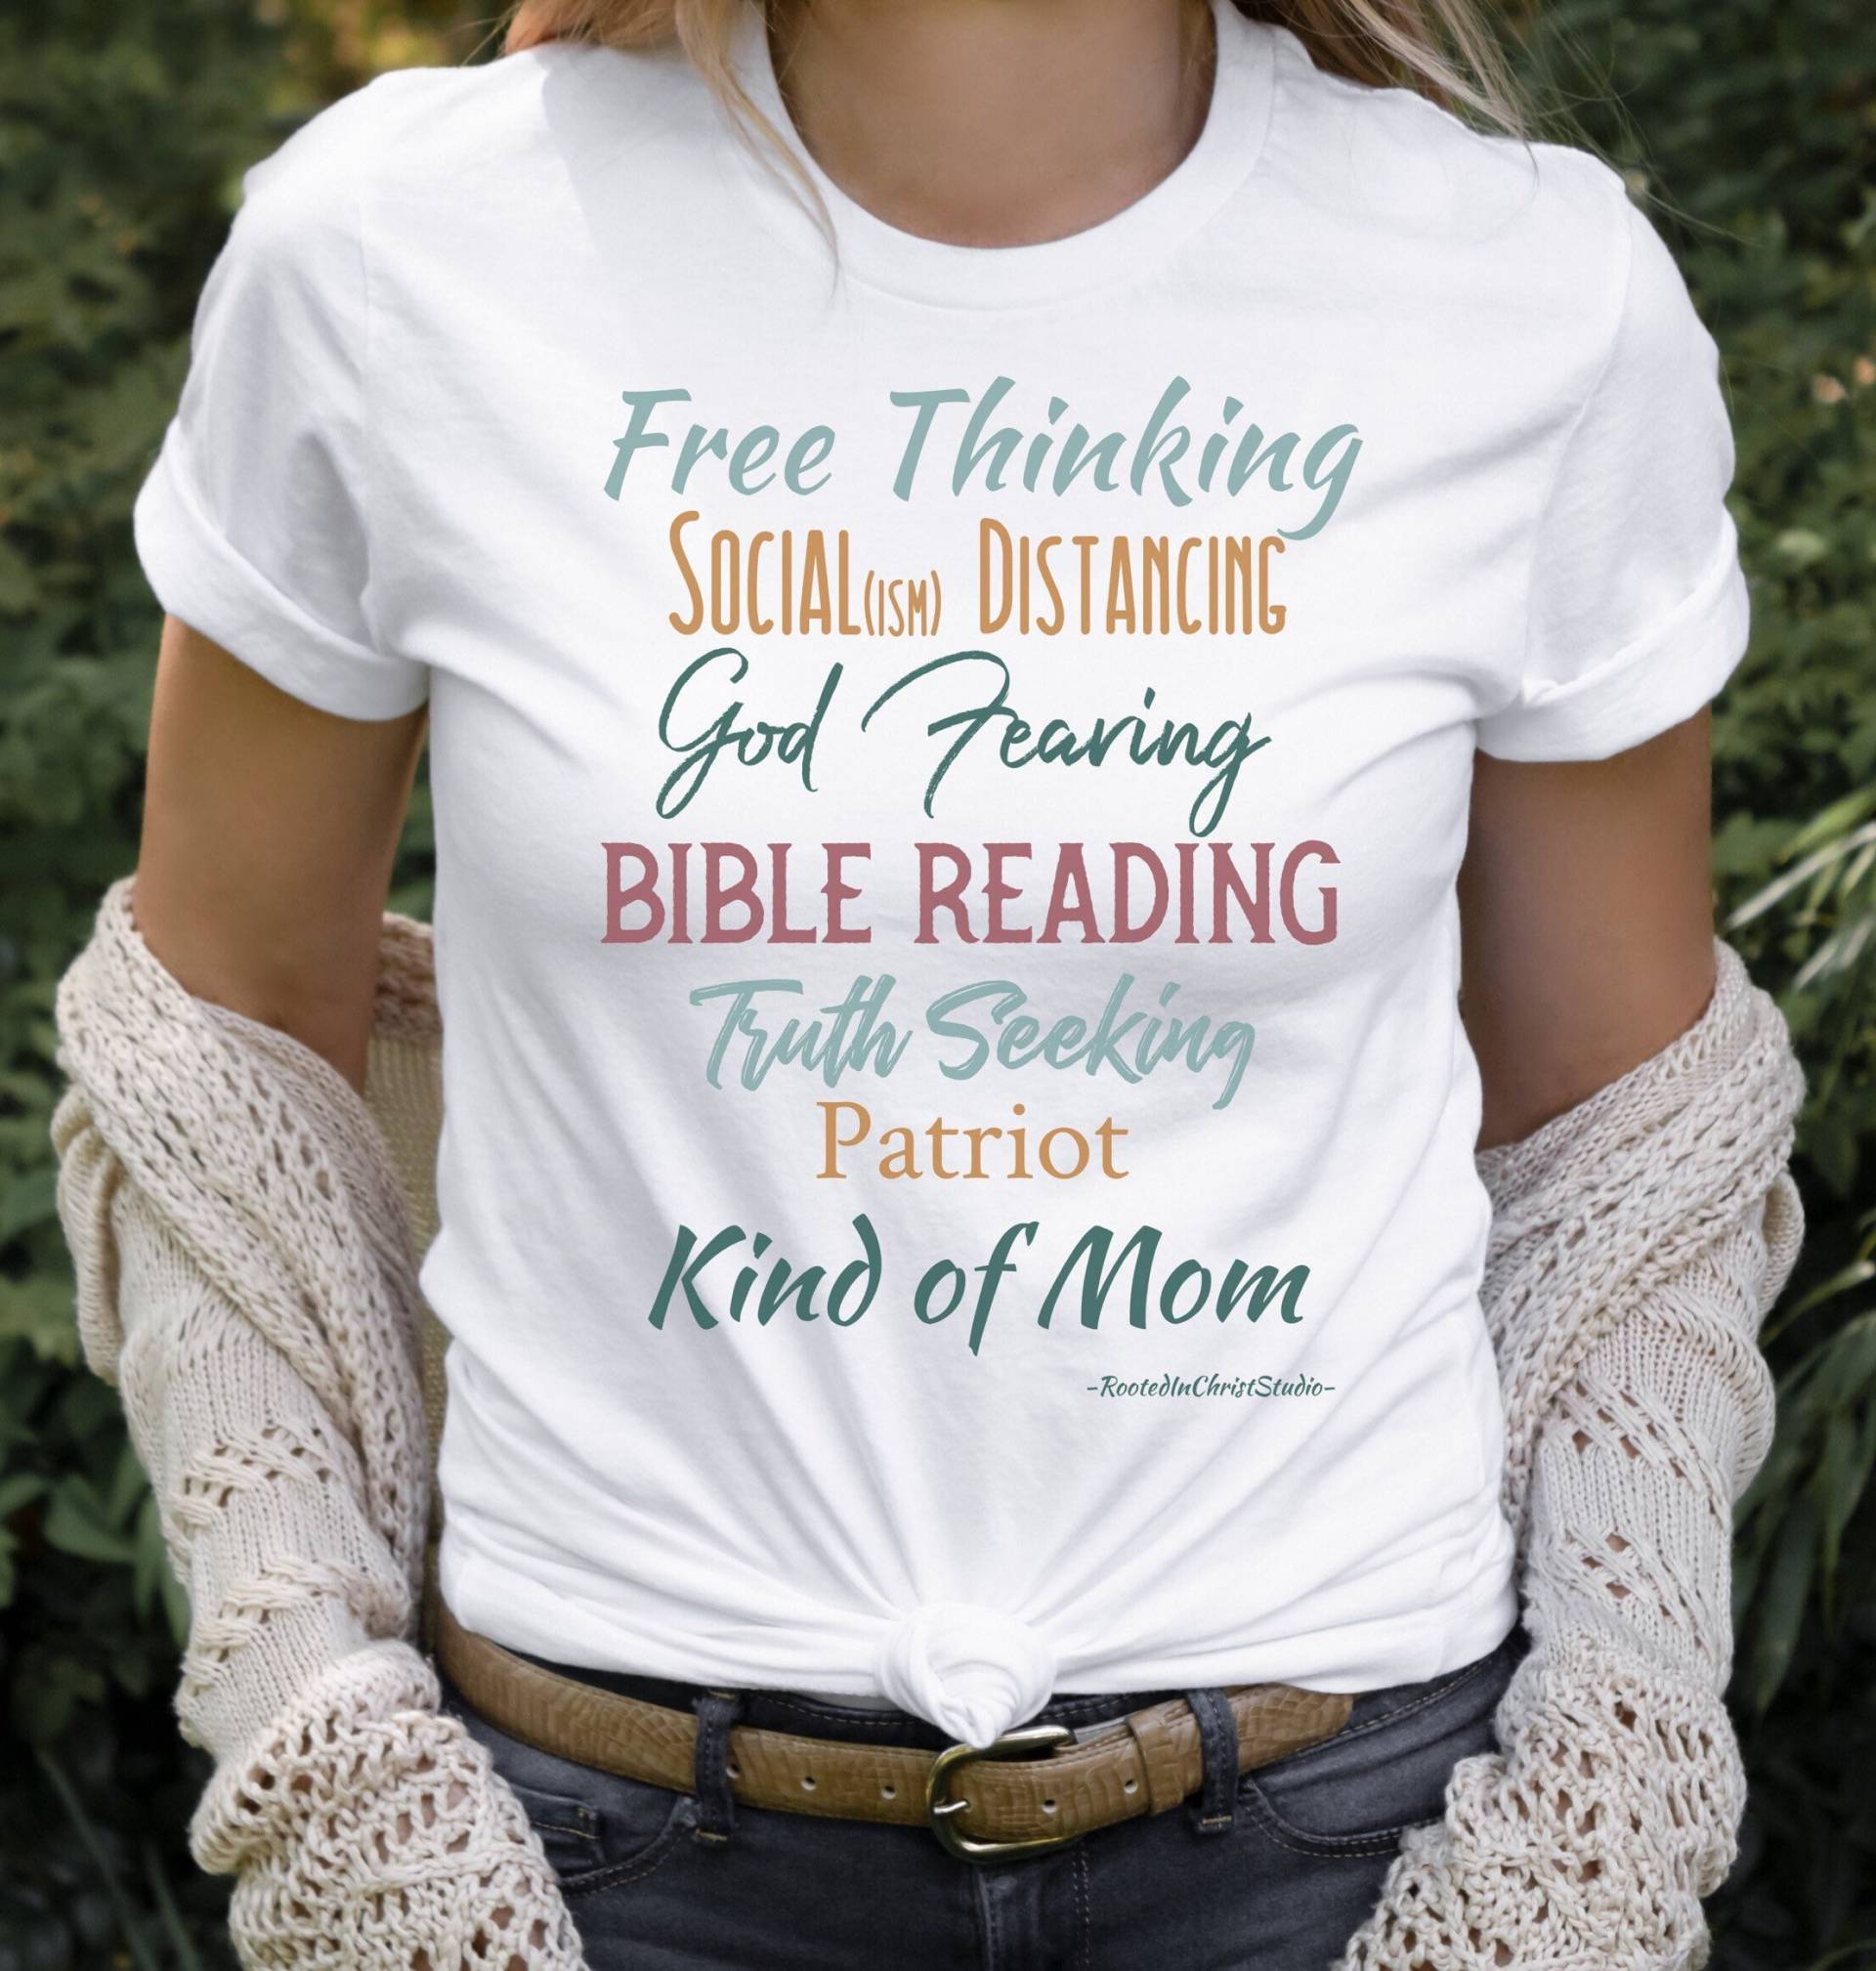 Free Thinking Social(Ism Distancing God Fearing Bible Reading Truth Seeking Patriot Kind Of Mom Shirt, Konservatives Homeschool von RootedInChristStudio